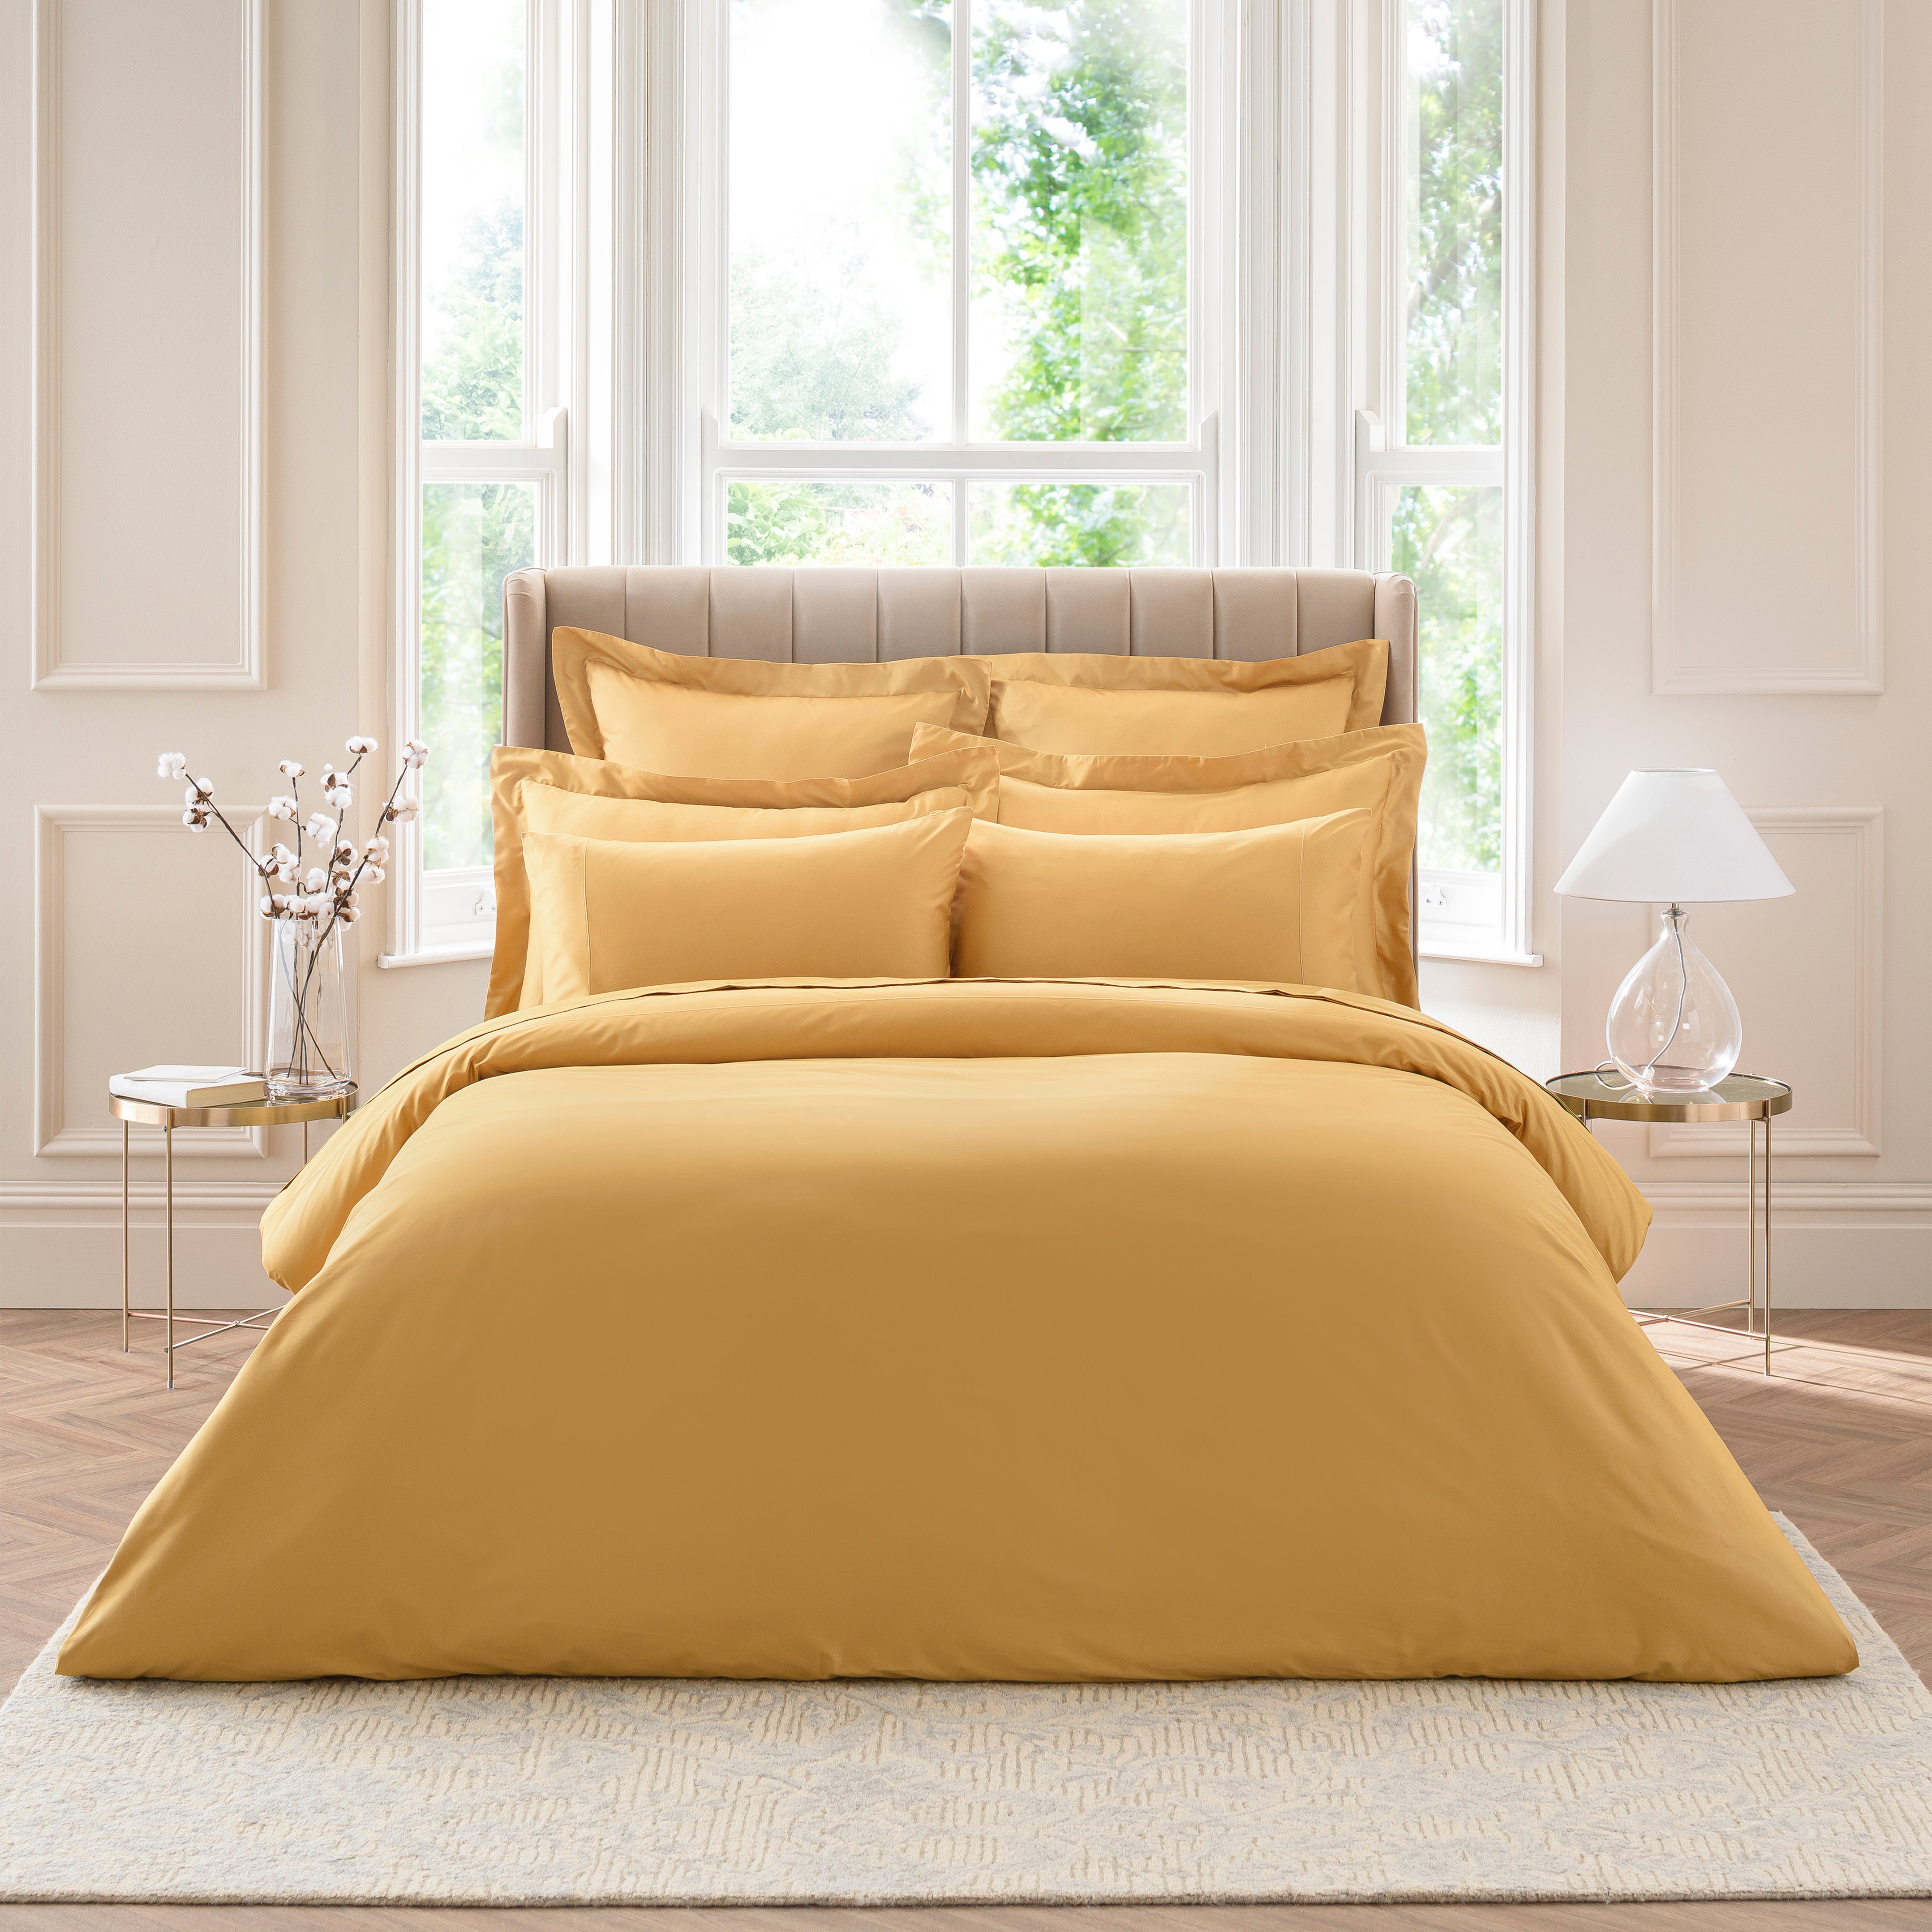 Dorma 300 Thread Count 100 Cotton Sateen Plain Ochre Duvet Cover Yellow